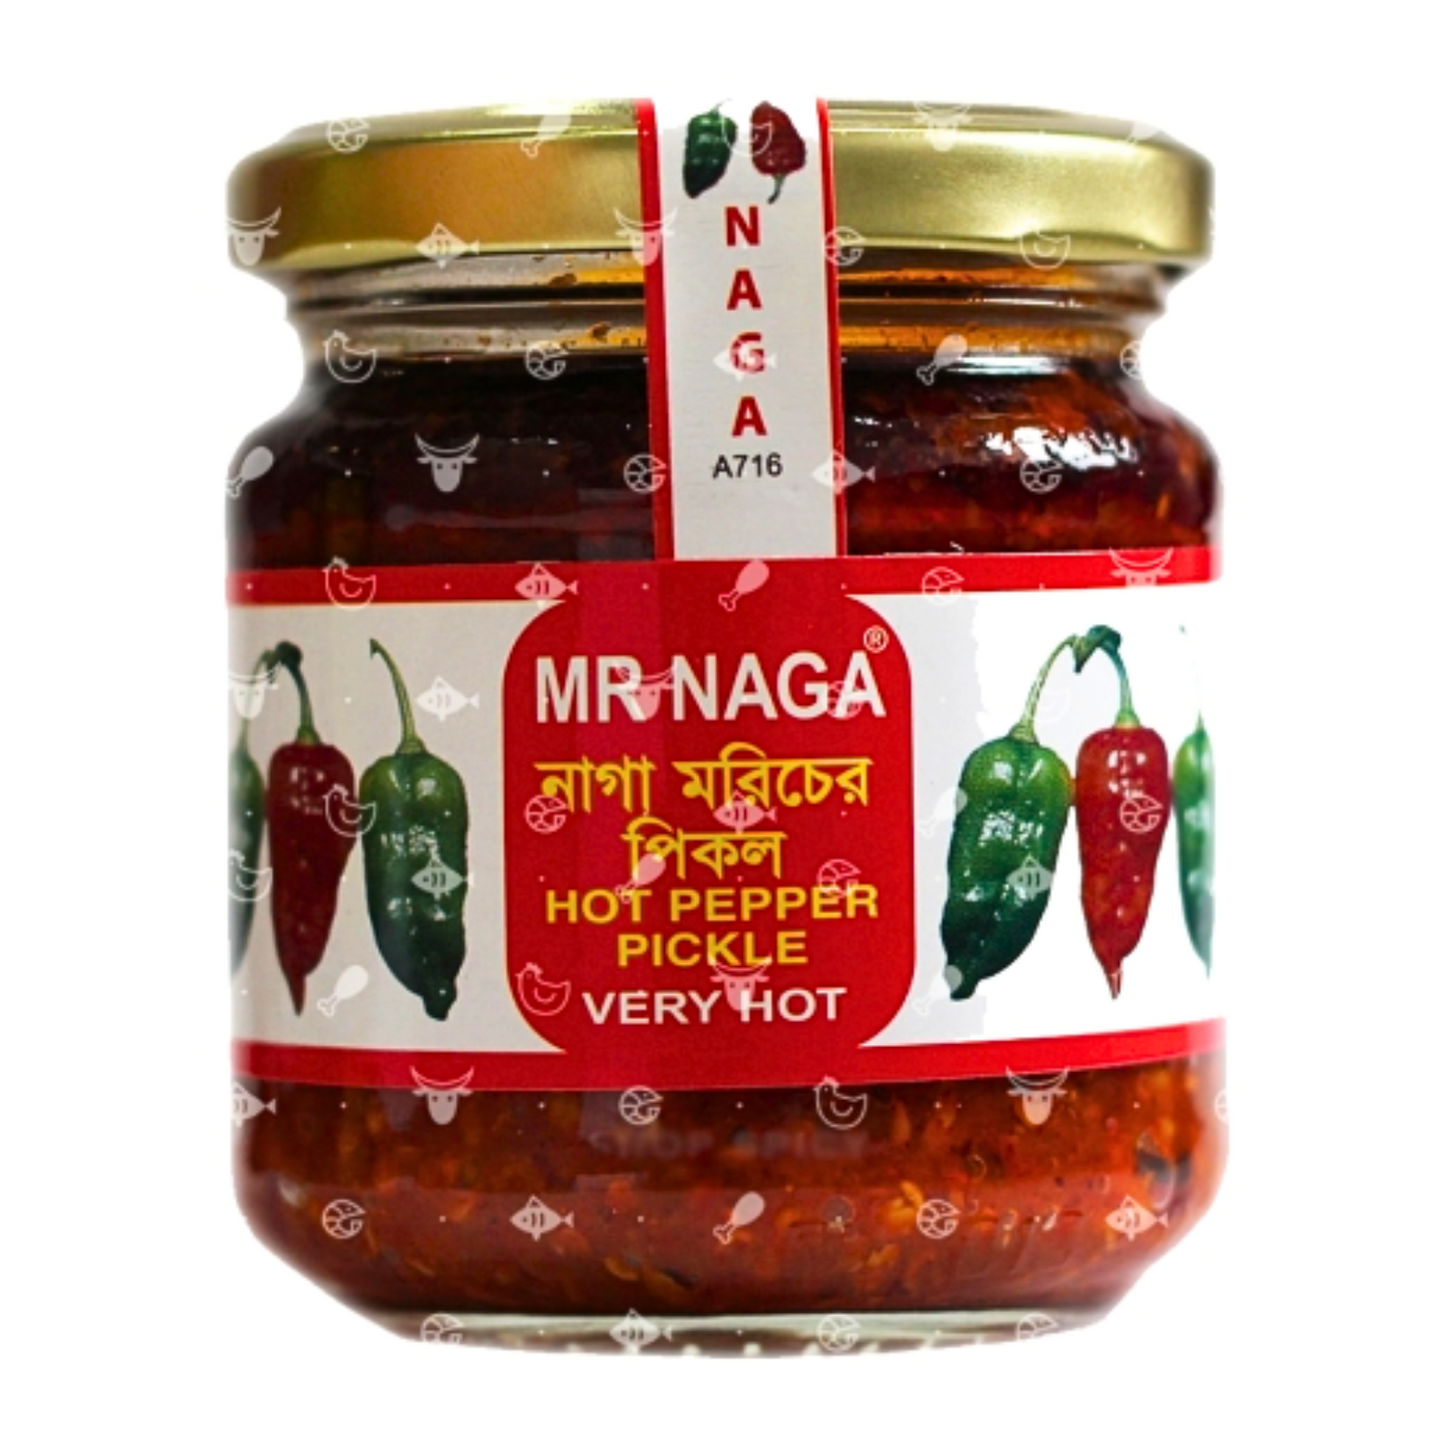 Mr Naga Pickle - Hot Pepper Pickle